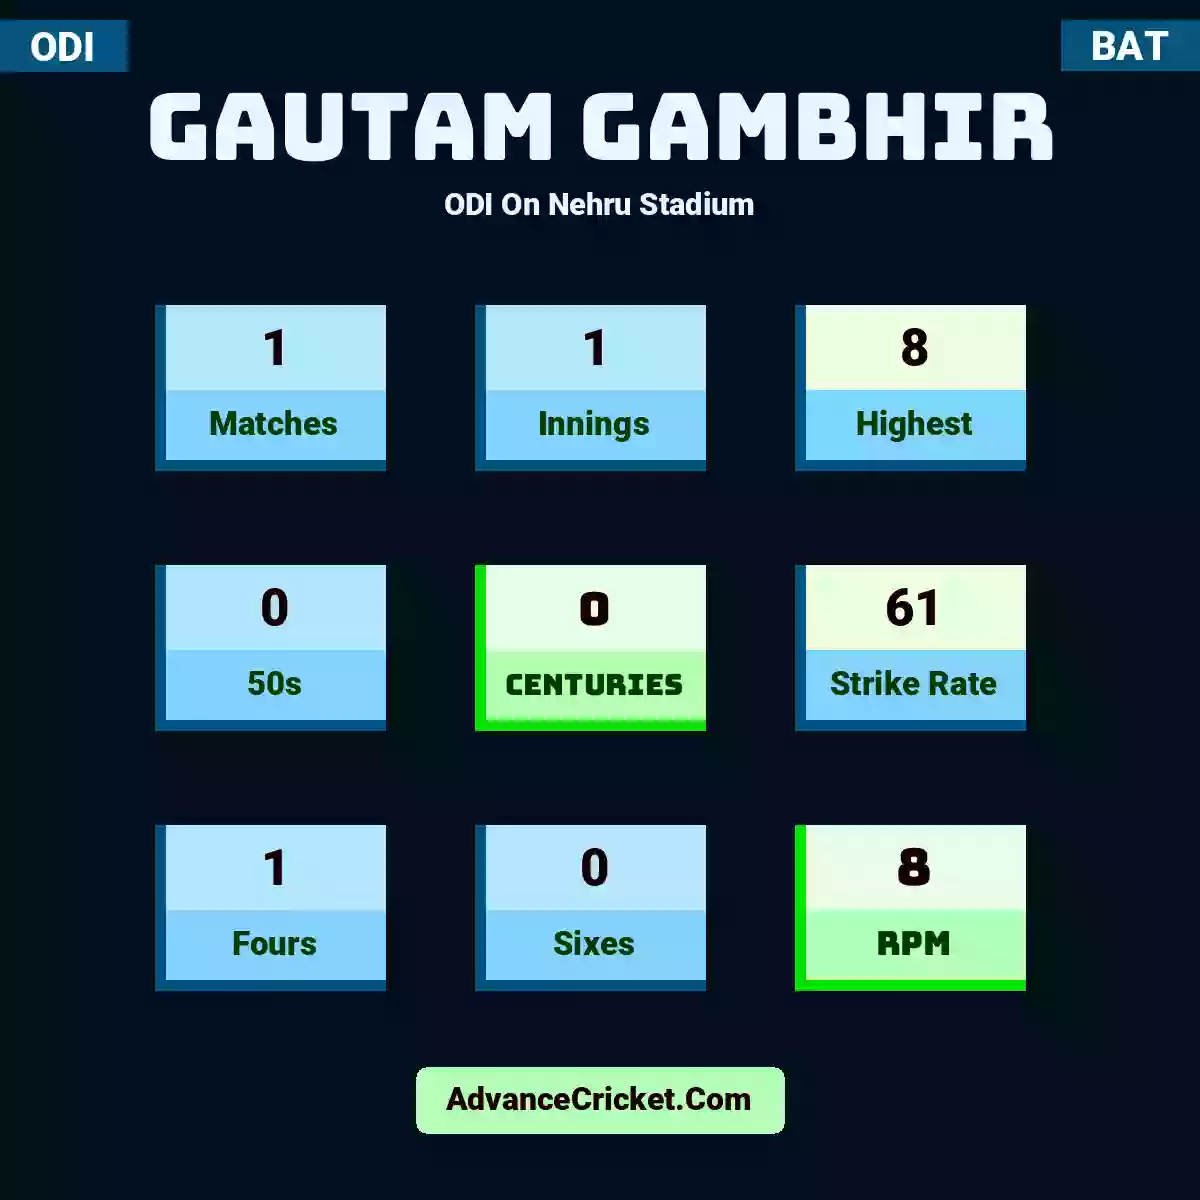 Gautam Gambhir ODI  On Nehru Stadium, Gautam Gambhir played 1 matches, scored 8 runs as highest, 0 half-centuries, and 0 centuries, with a strike rate of 61. G.Gambhir hit 1 fours and 0 sixes, with an RPM of 8.